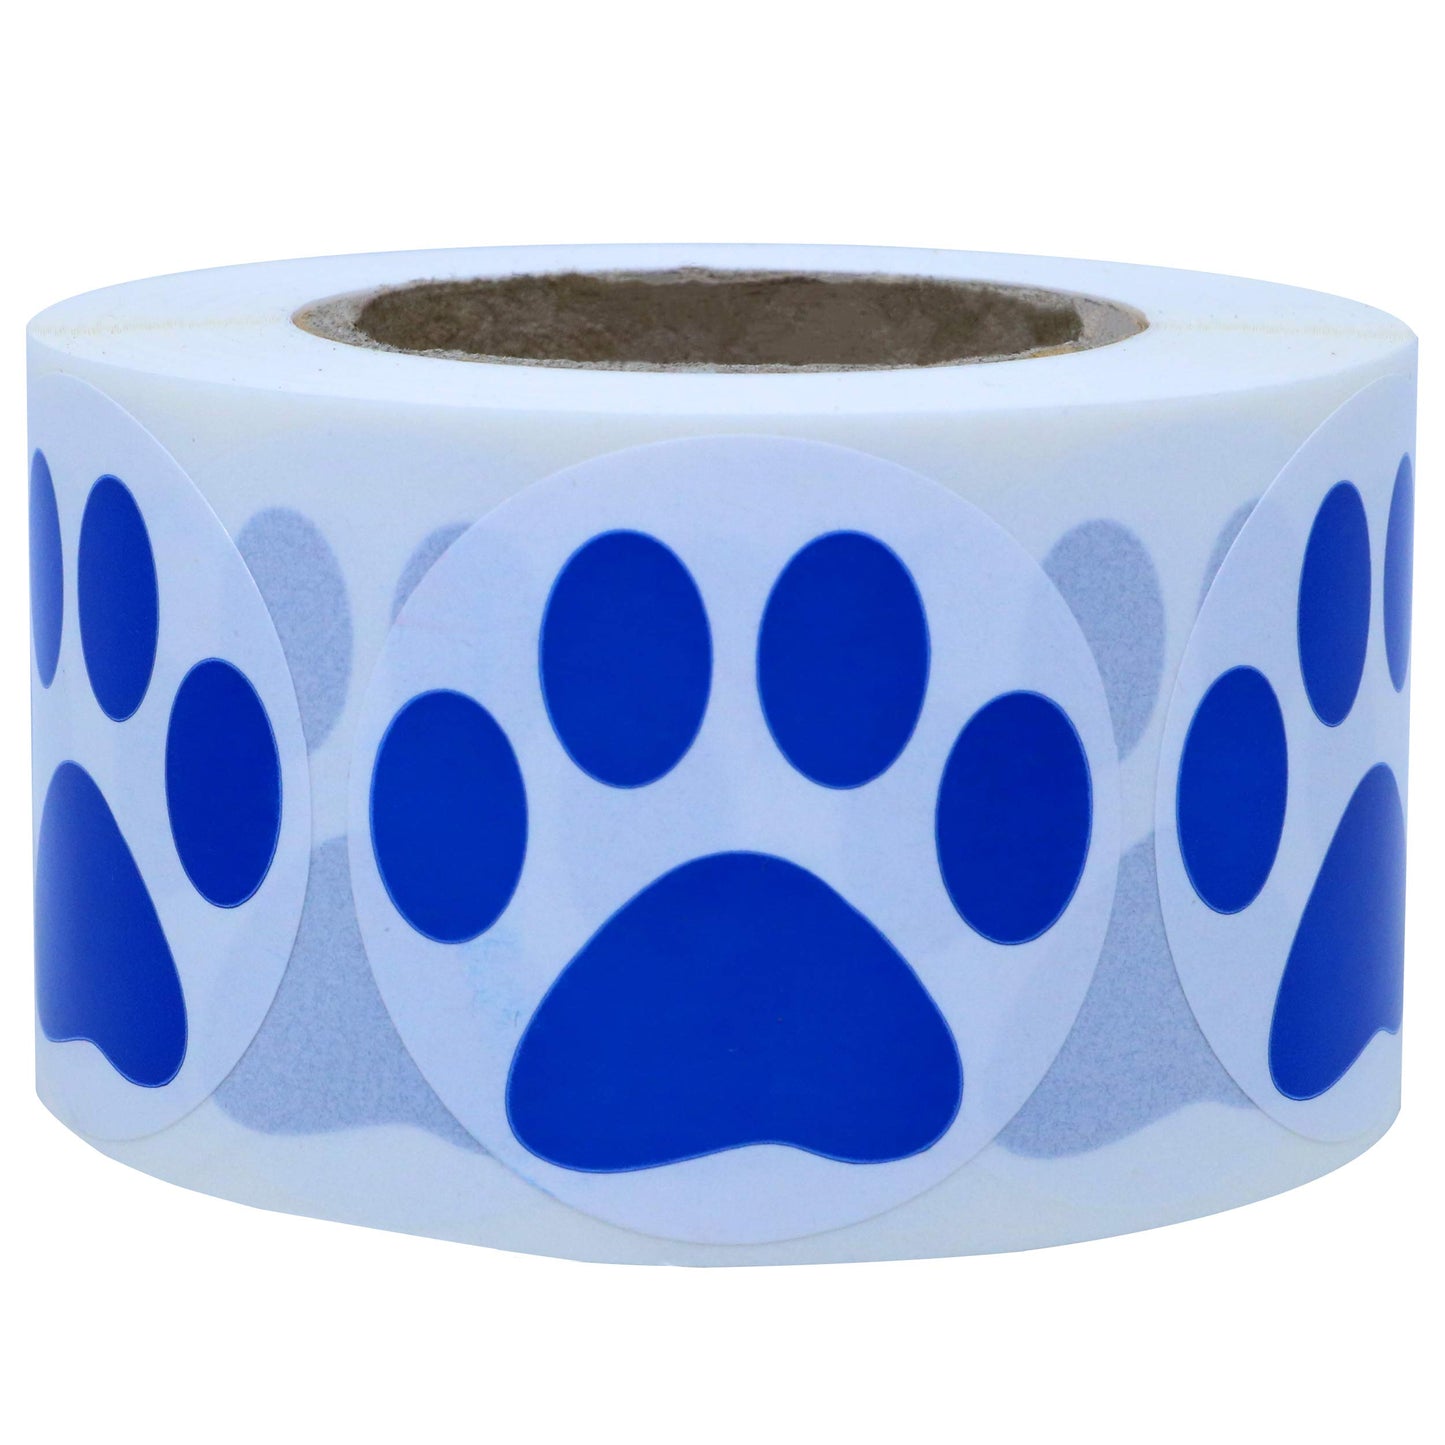 Hybsk 1.5 inch Round Black Bear Paw Print Dog Puppy Paw Stickers